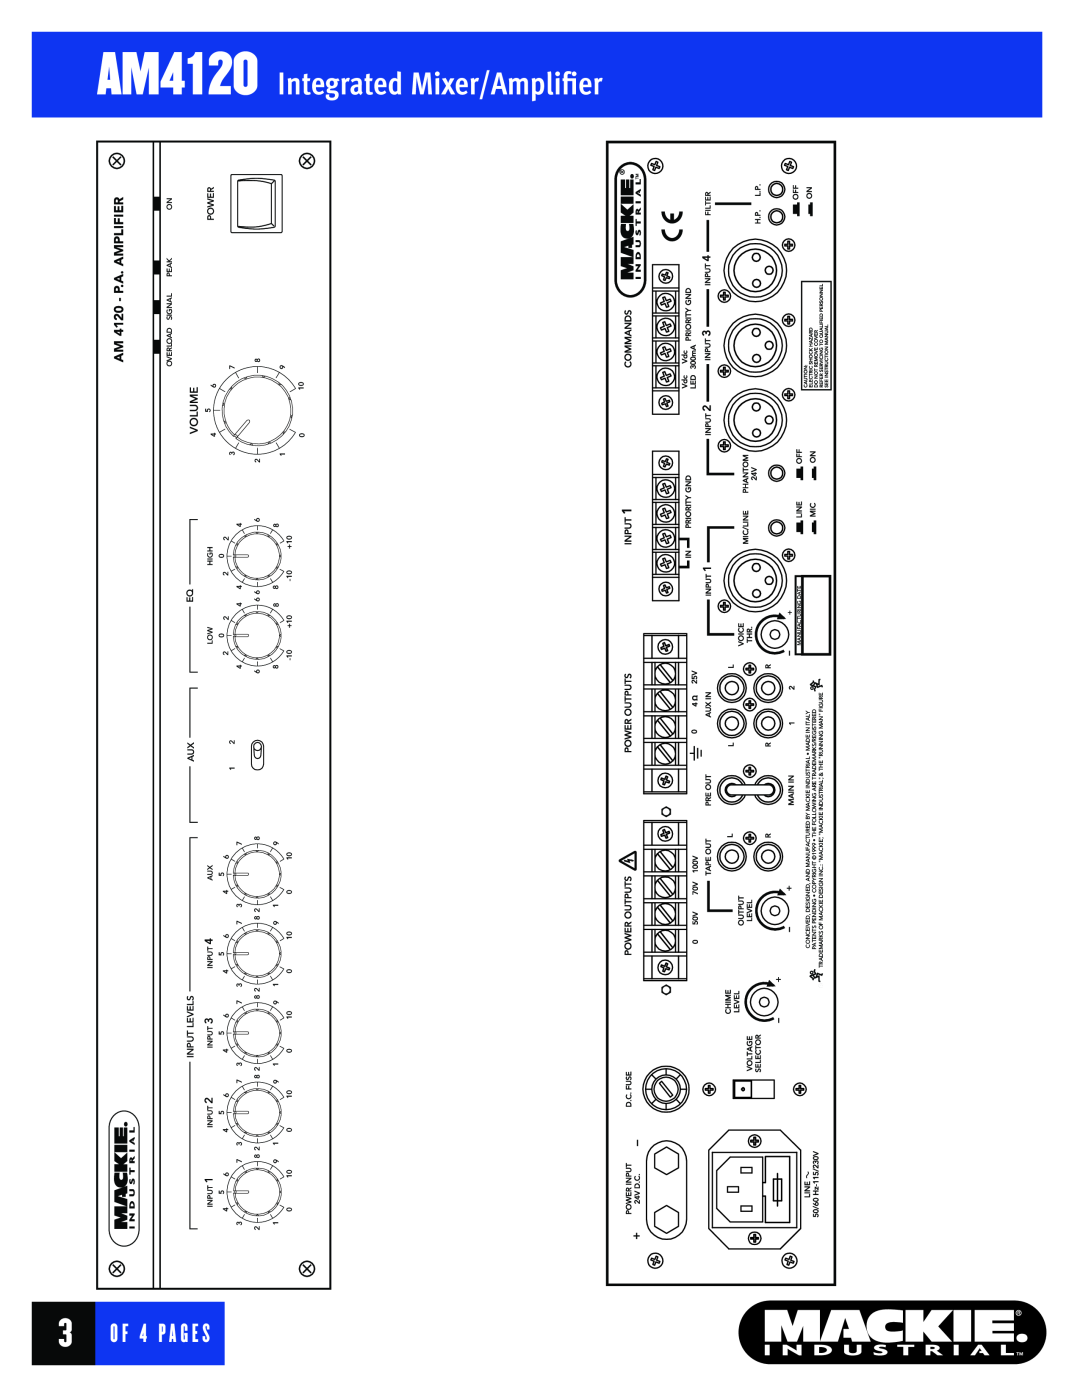 Mackie warranty AM4120 Integrated Mixer/Ampliﬁer, AM 4120 - P.A. AMPLIFIER, A G E, Volume 